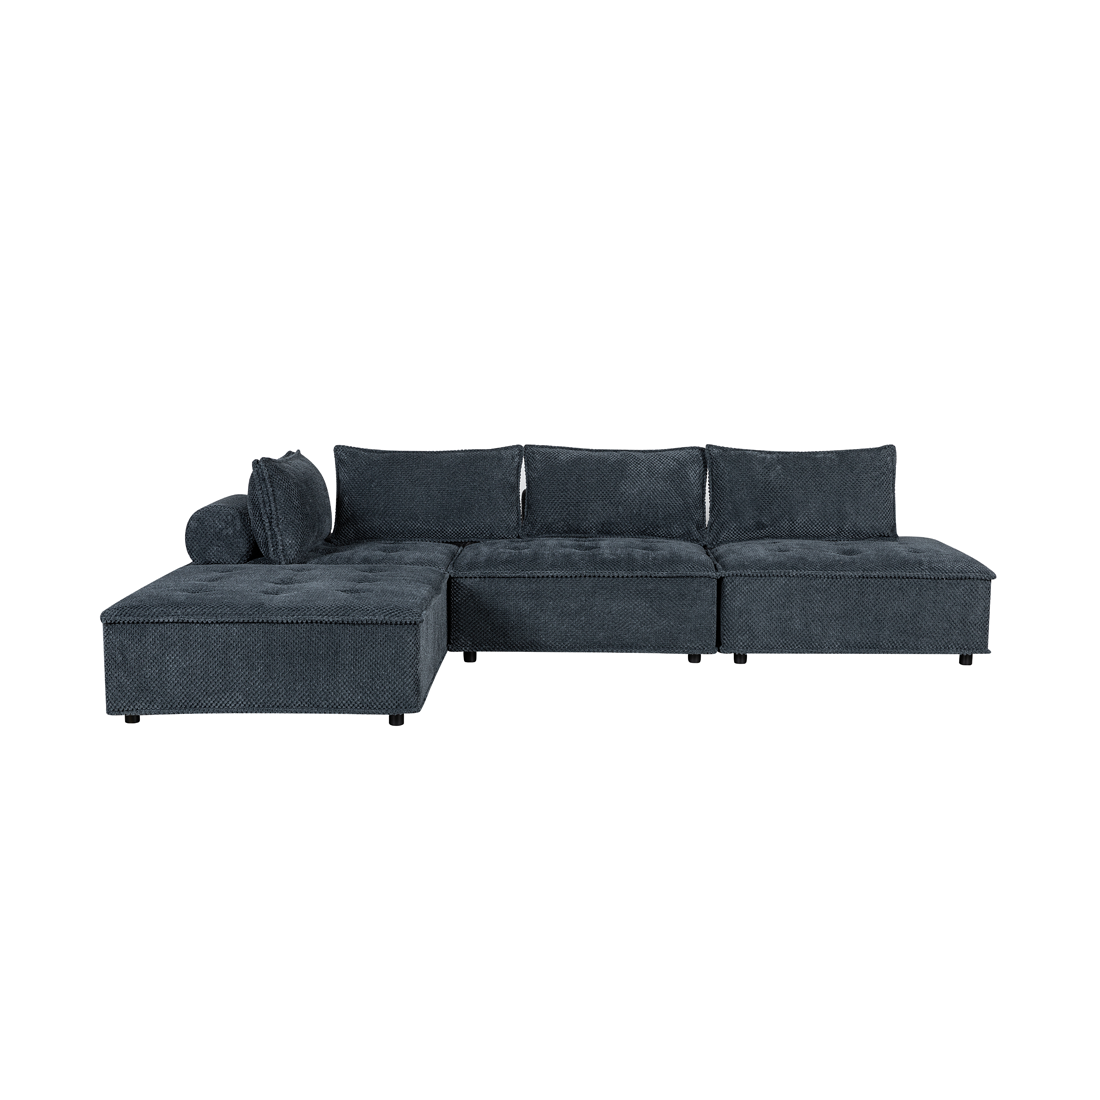 Konya Fabric Chaise Lounge - Grey